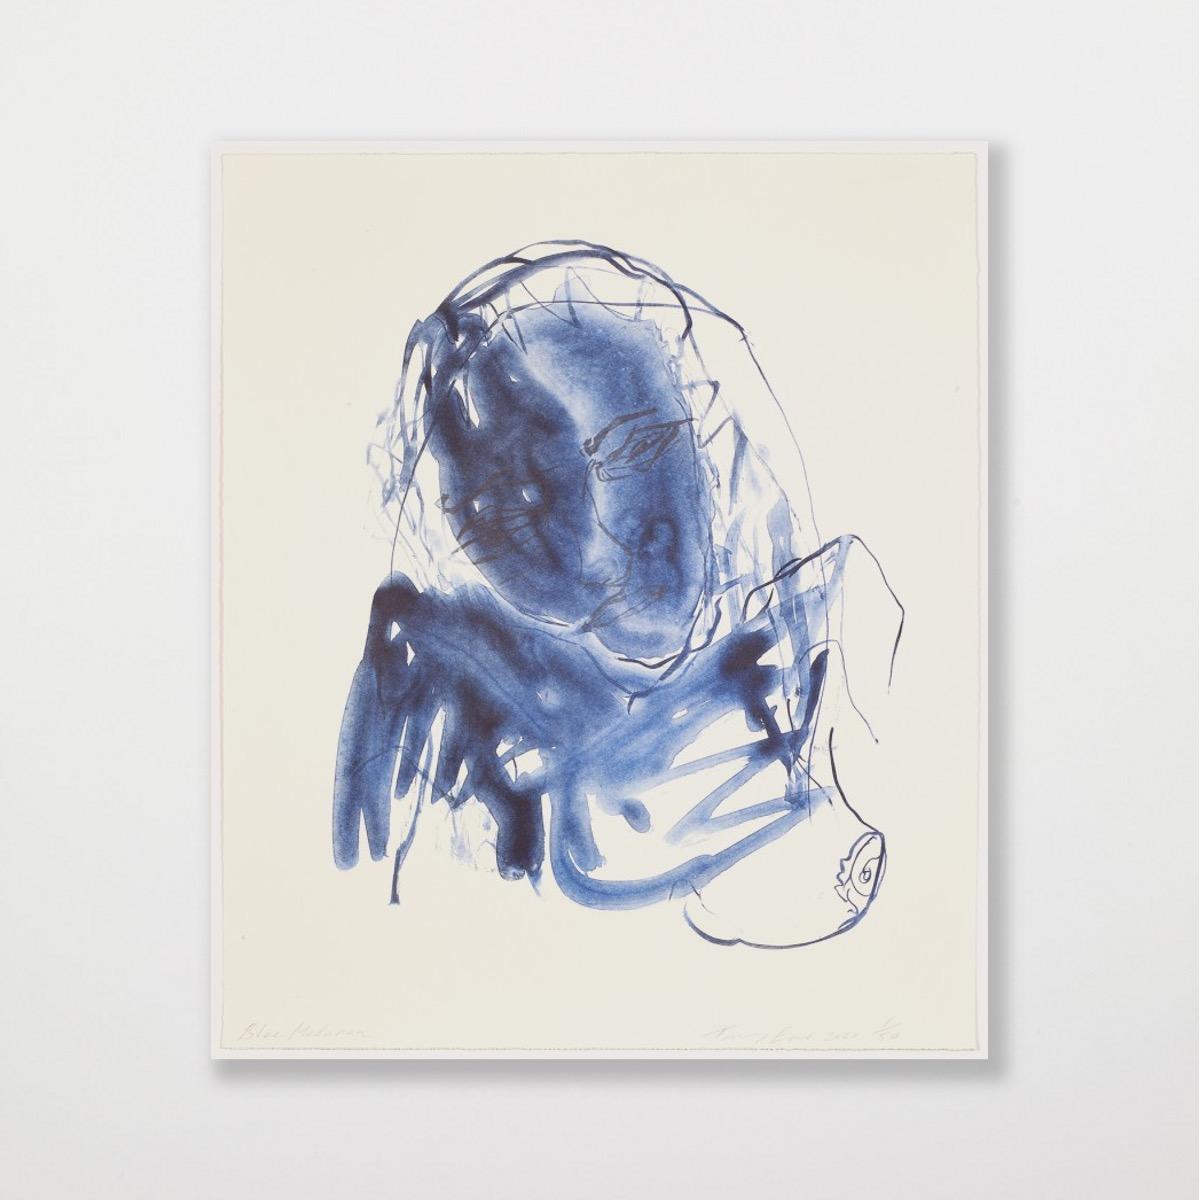 Tracey Emin Figurative Print - Blue Madonna - Emin, Contemporary, YBAs, Lithograph, Portrait, Black